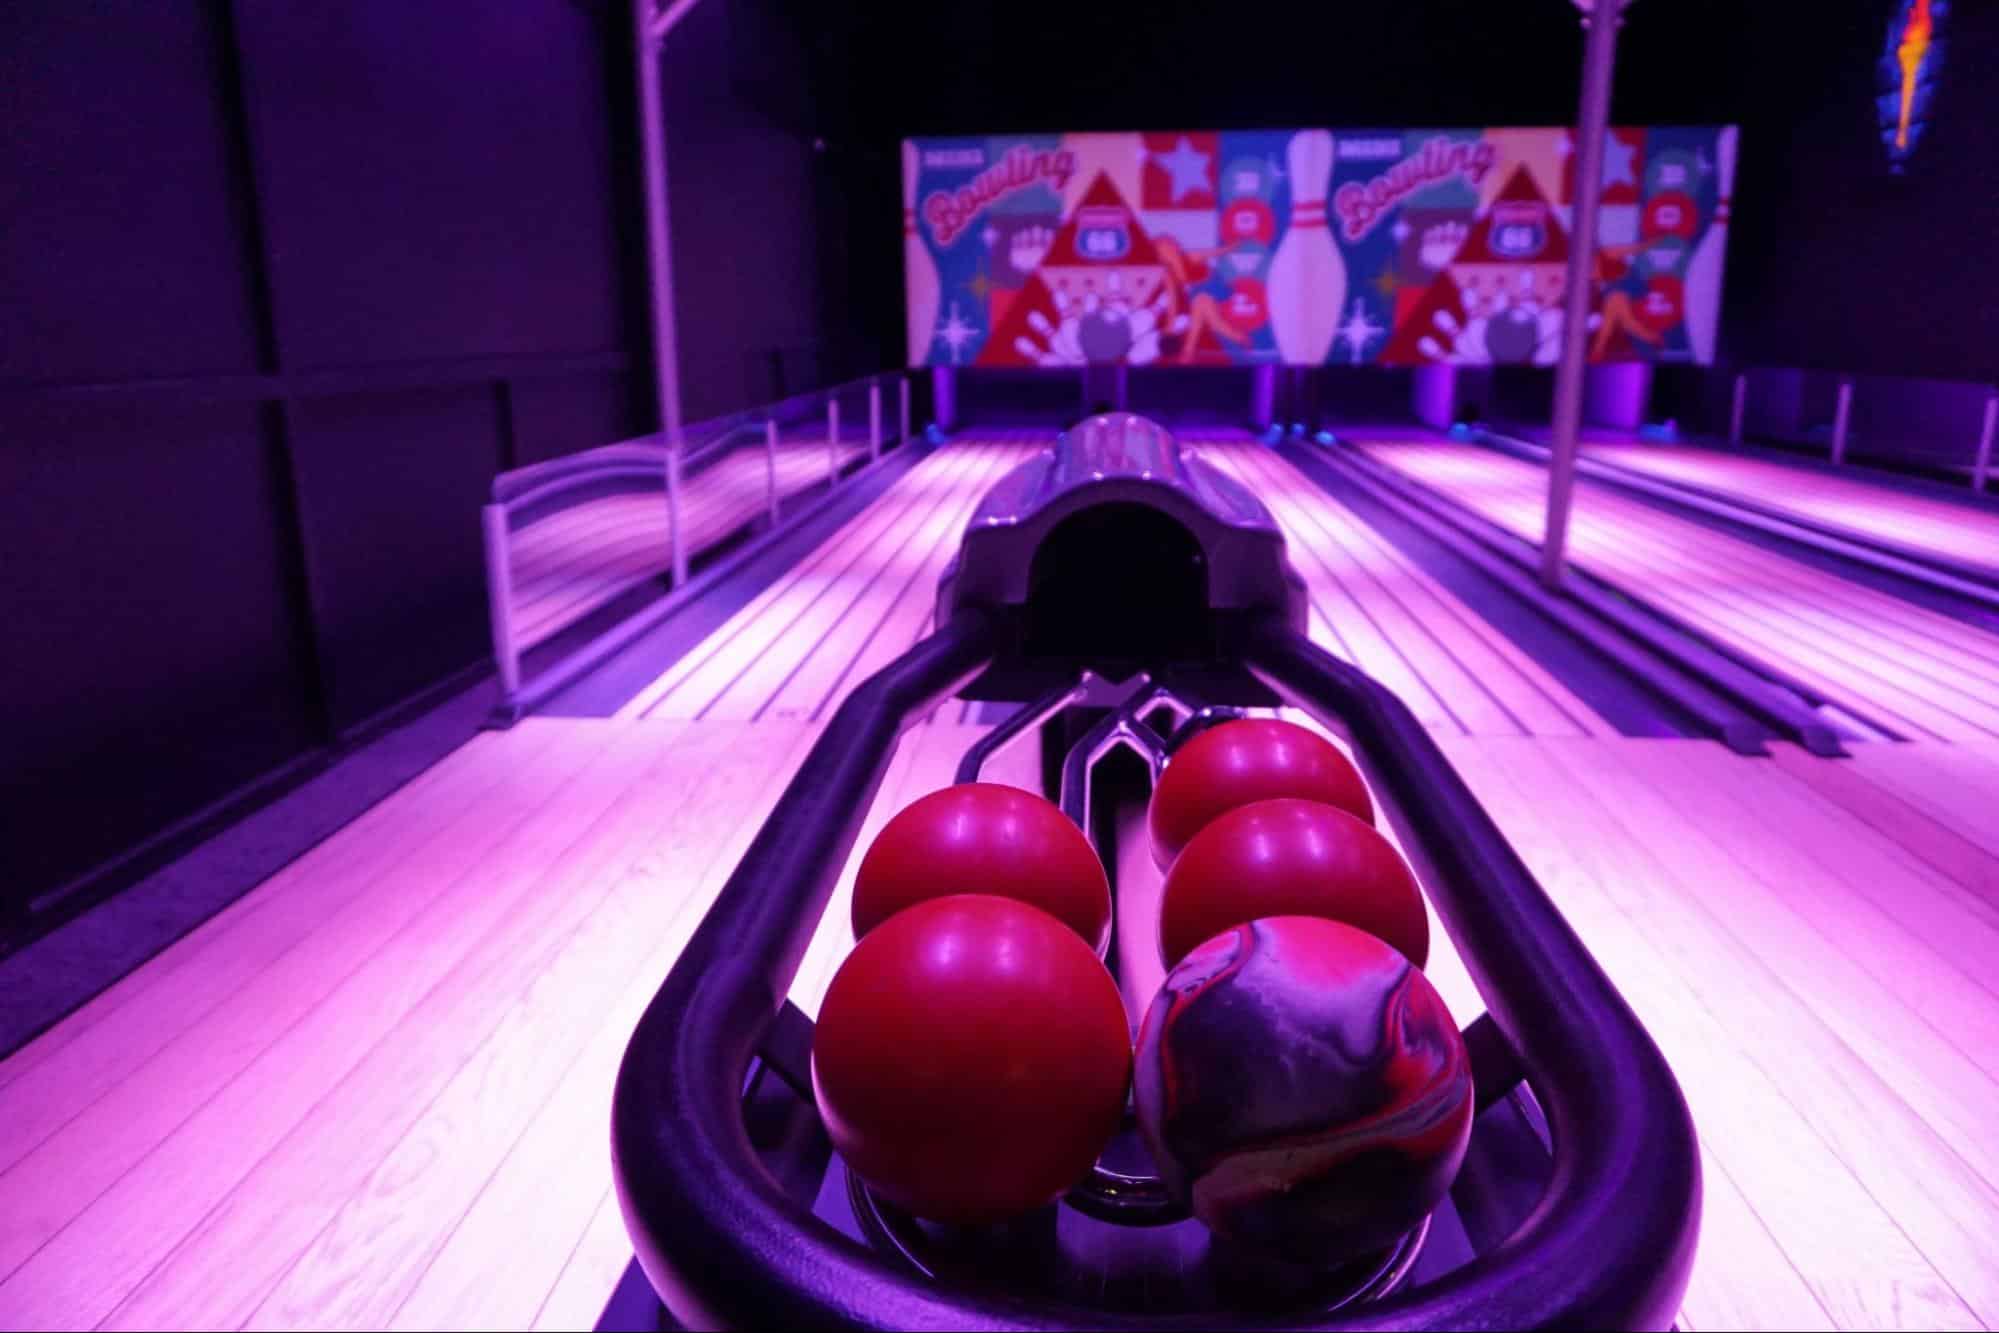 Neon mini bowling lanes with mini bowling balls at Monster Mini Golf.